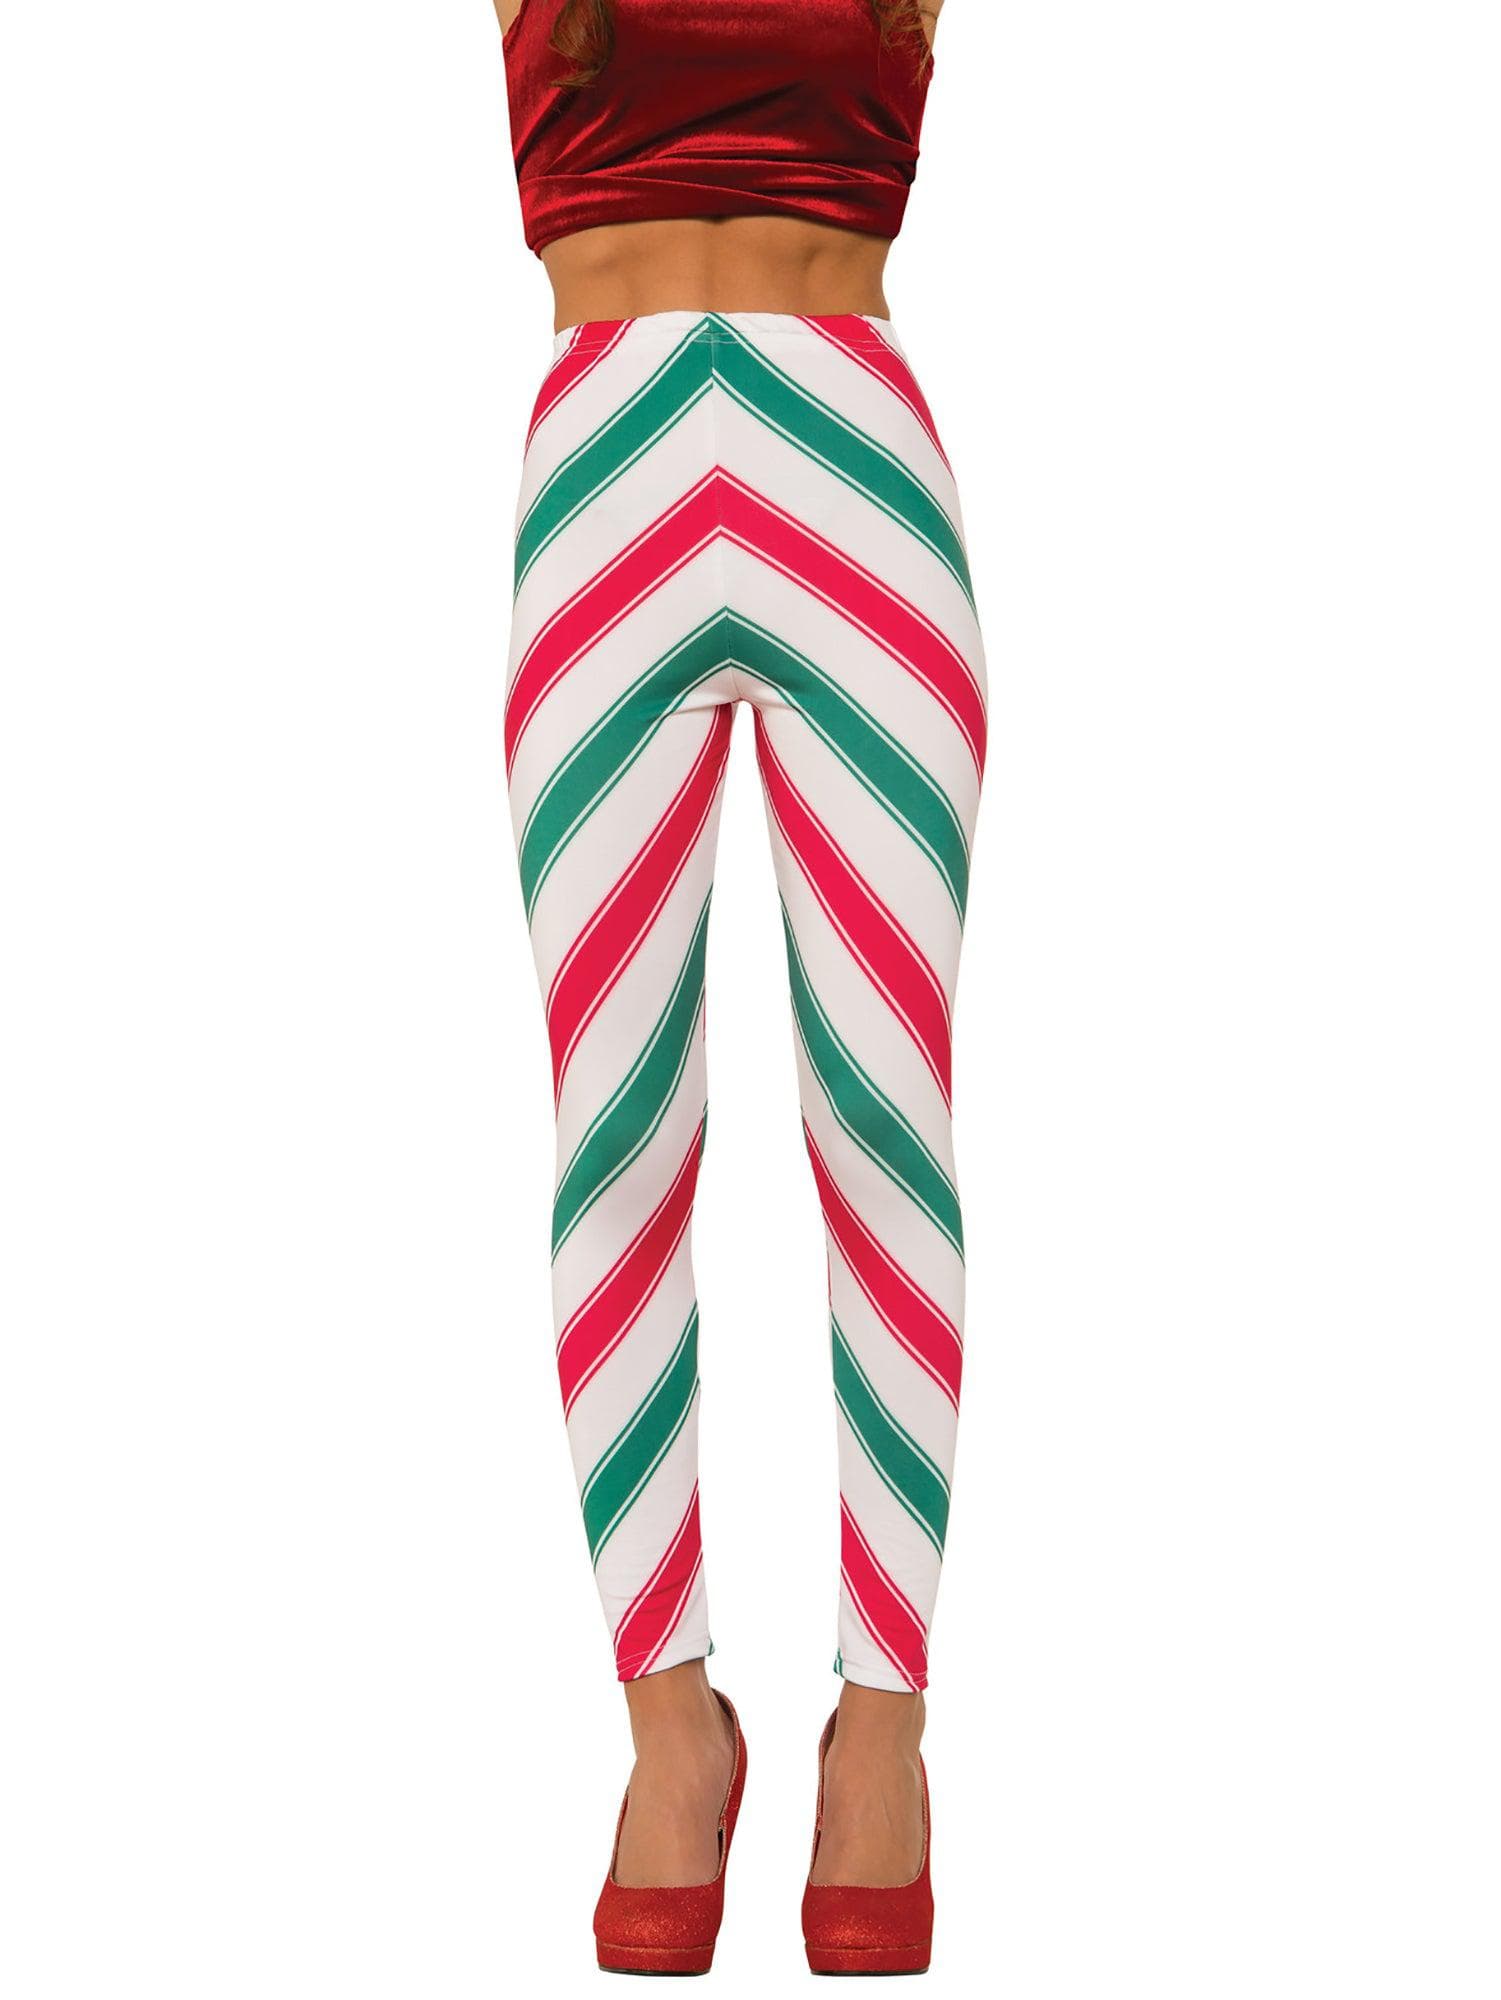 Adult Ms. Candy Cane Leggings Costume - costumes.com